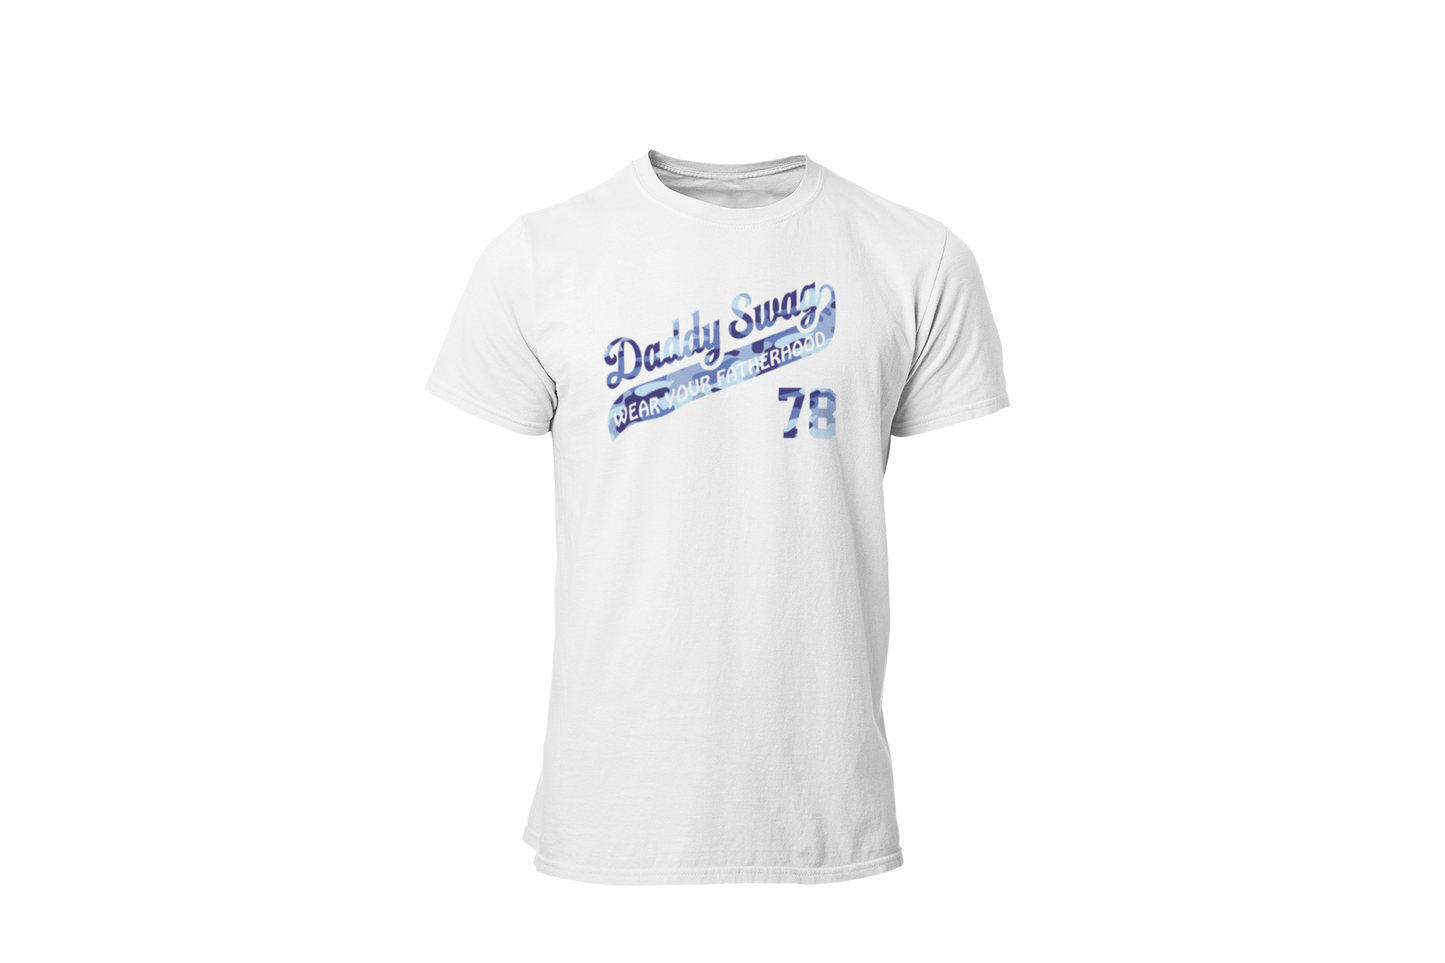 Daddy Swag Fatigue 78 Edition T-Shirt